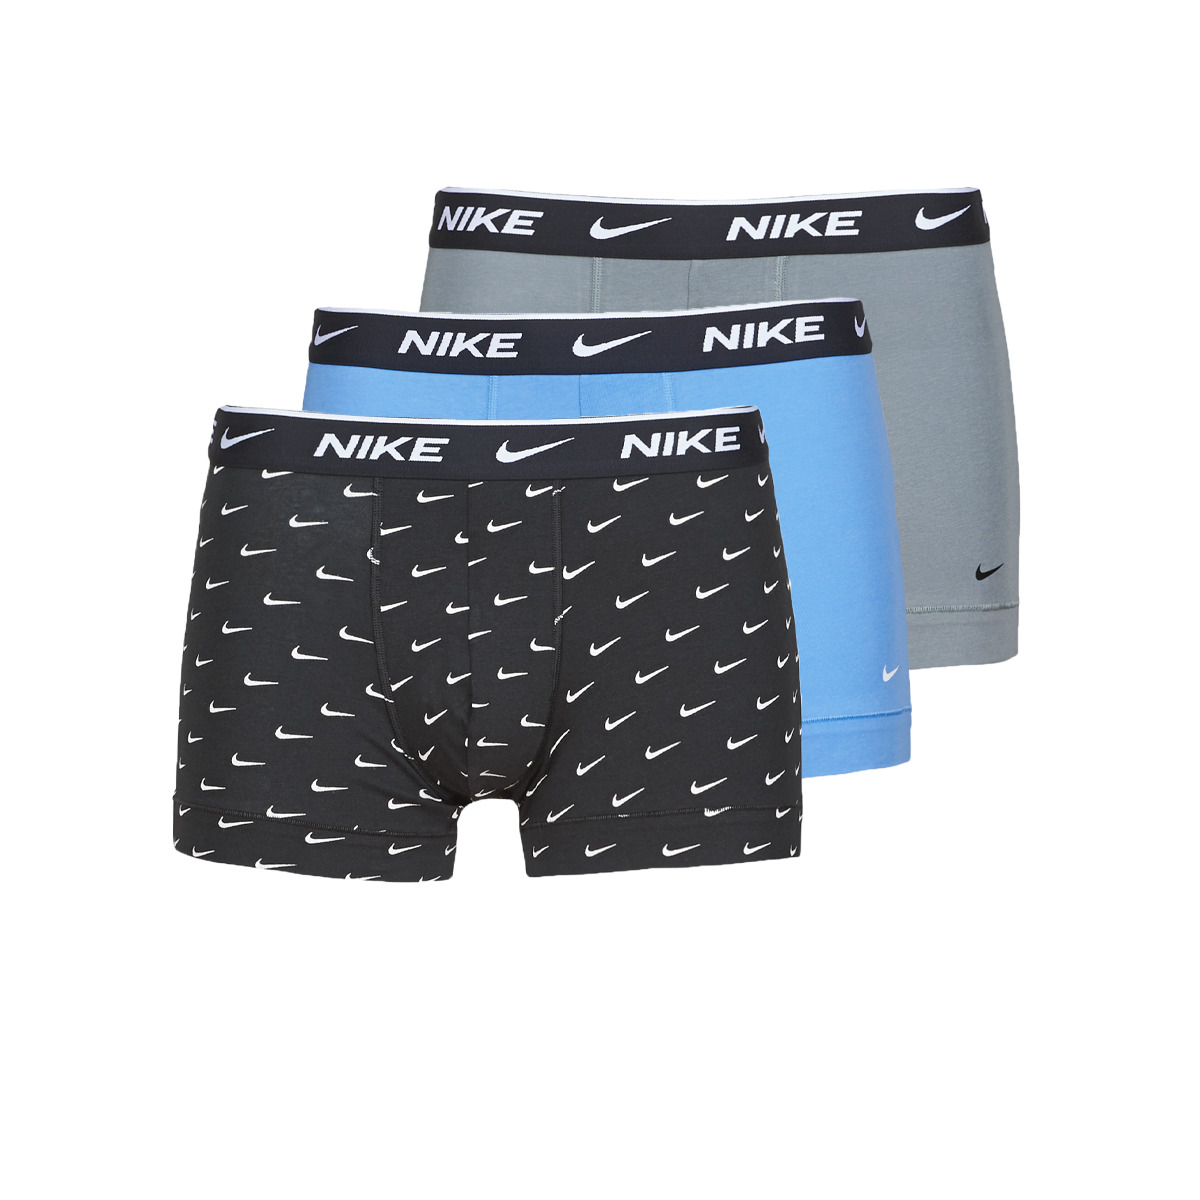 Nike Noir / Gris / Bleu EVERYDAY COTTON STRETCH X3 HDet